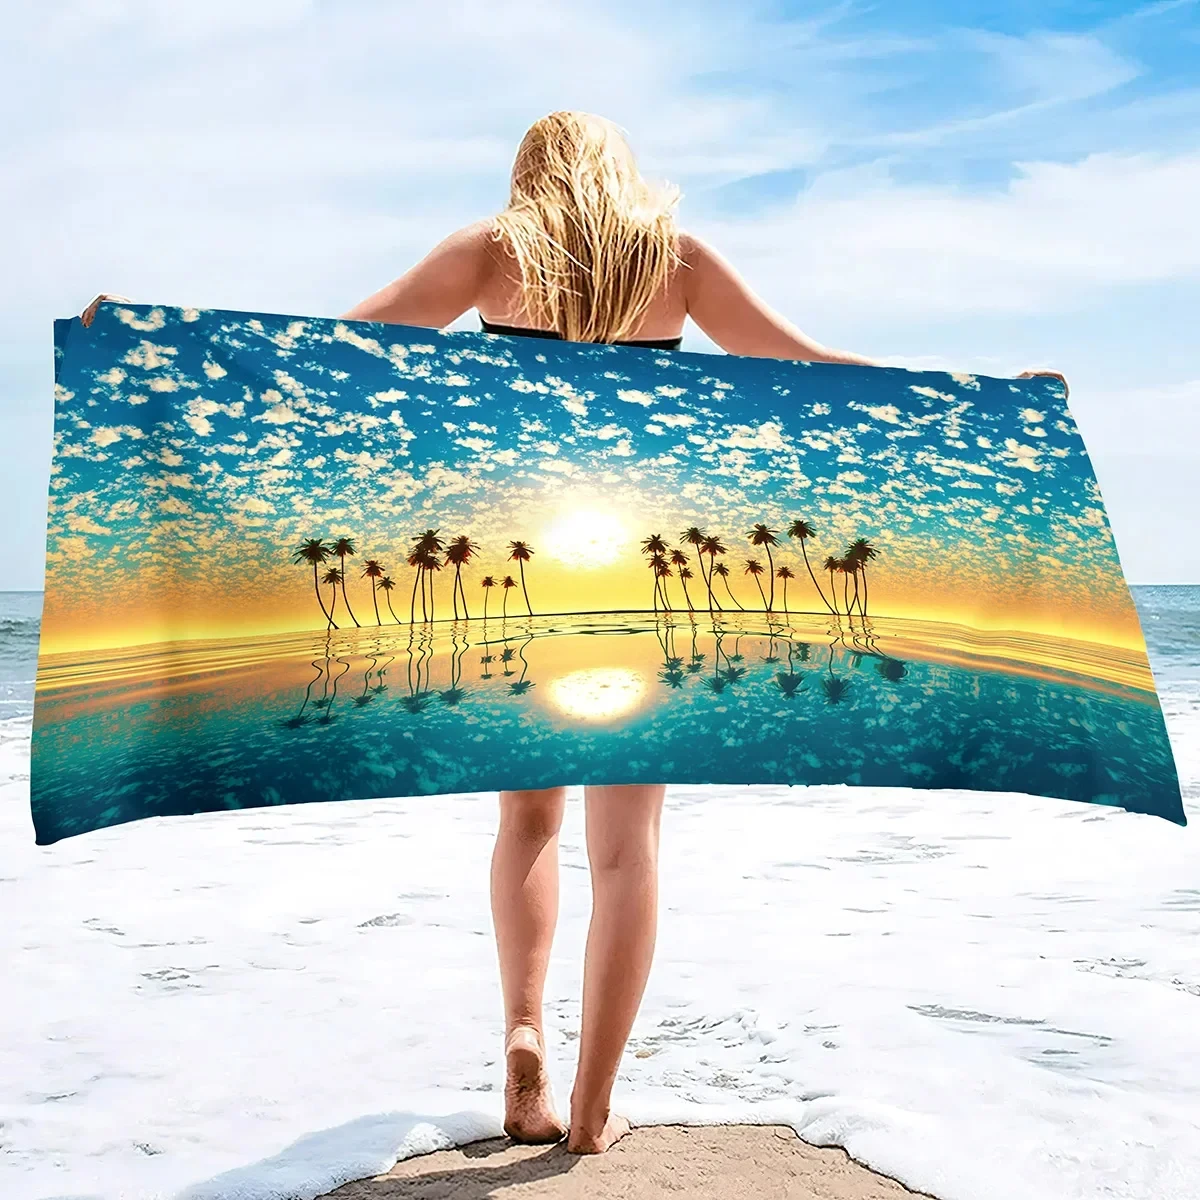 

Hawaiian Palm Tree Beach Towel Microfiber Beach Scenery Bath Towel Quick Dry Sand Free Pool Towels for Travel Swim Holiday Sport